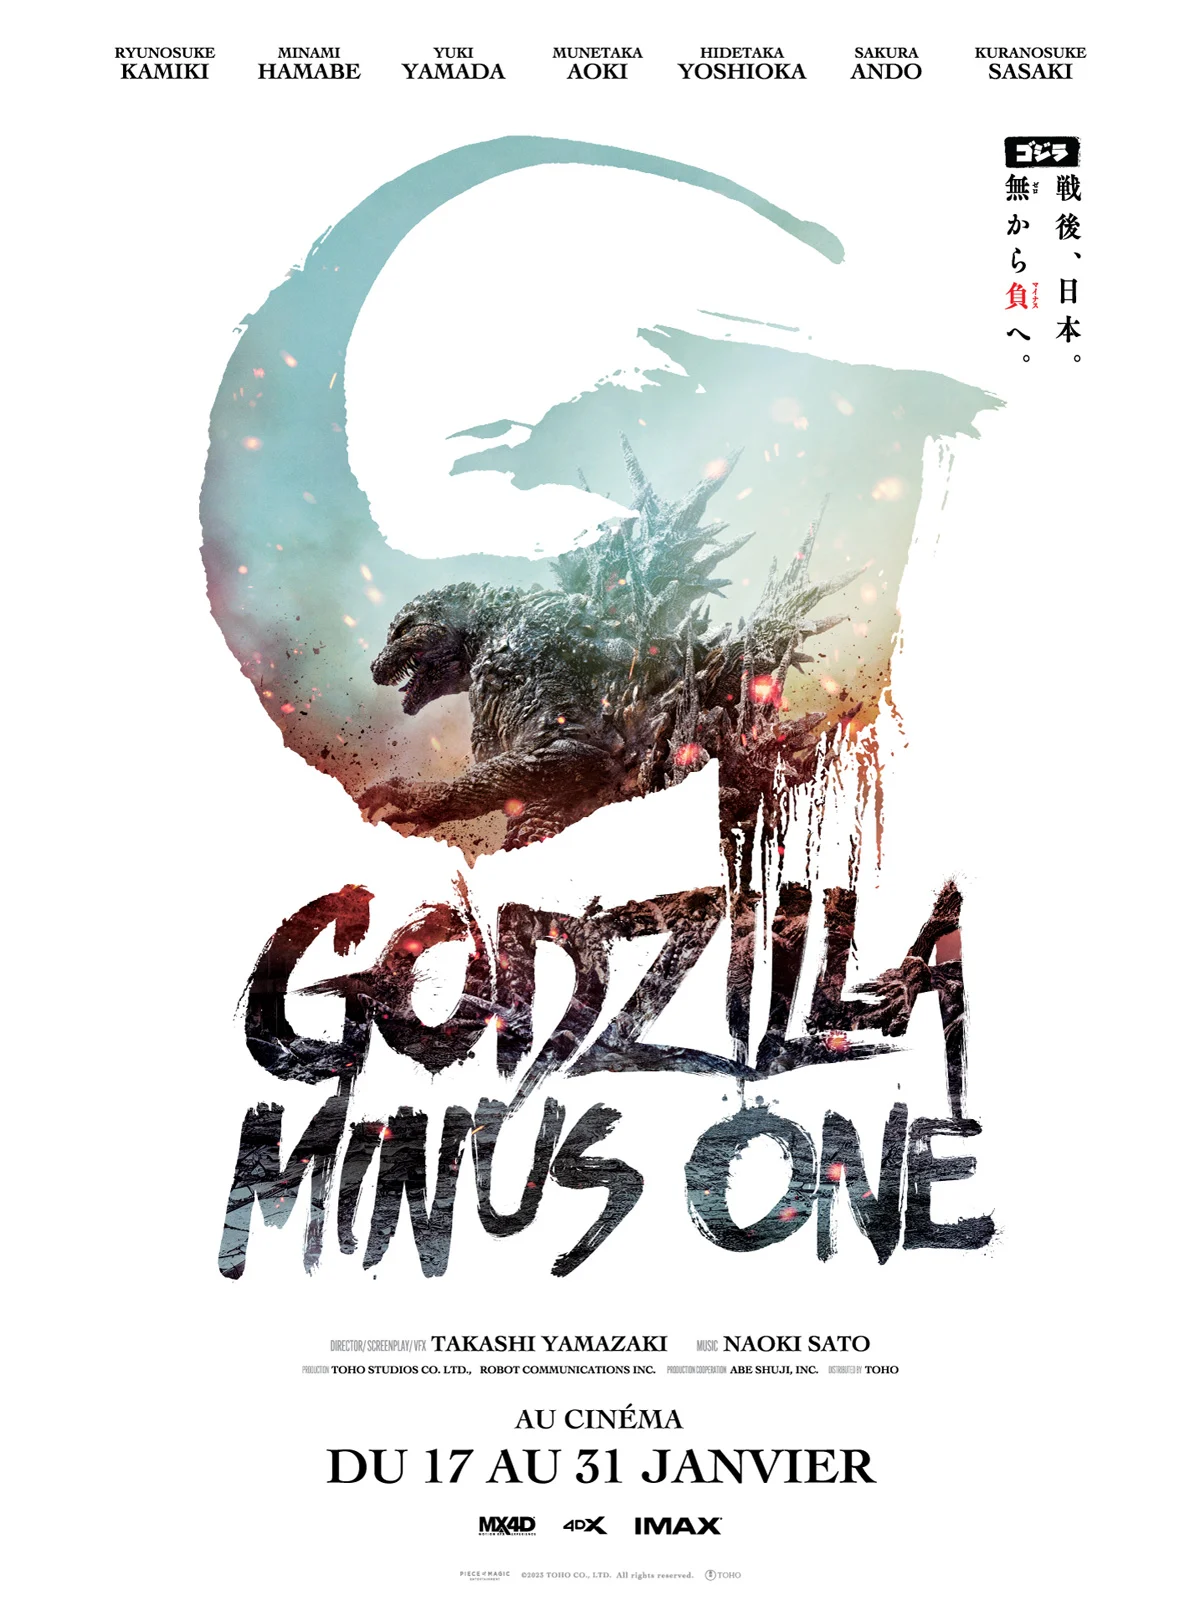 Godzilla Minus One de Takashi Yamazaki